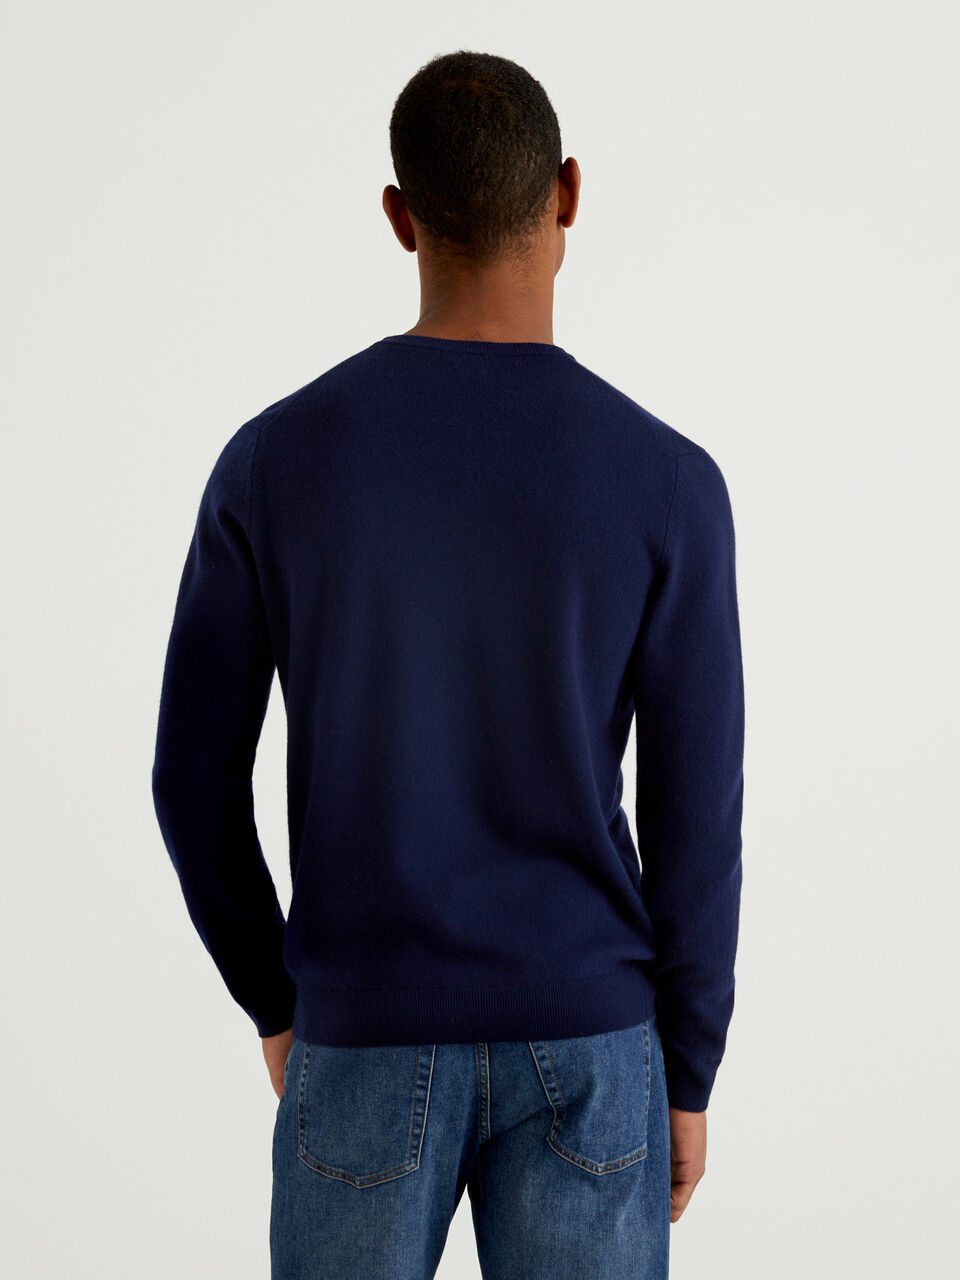 Dark blue crew neck sweater in pure virgin wool